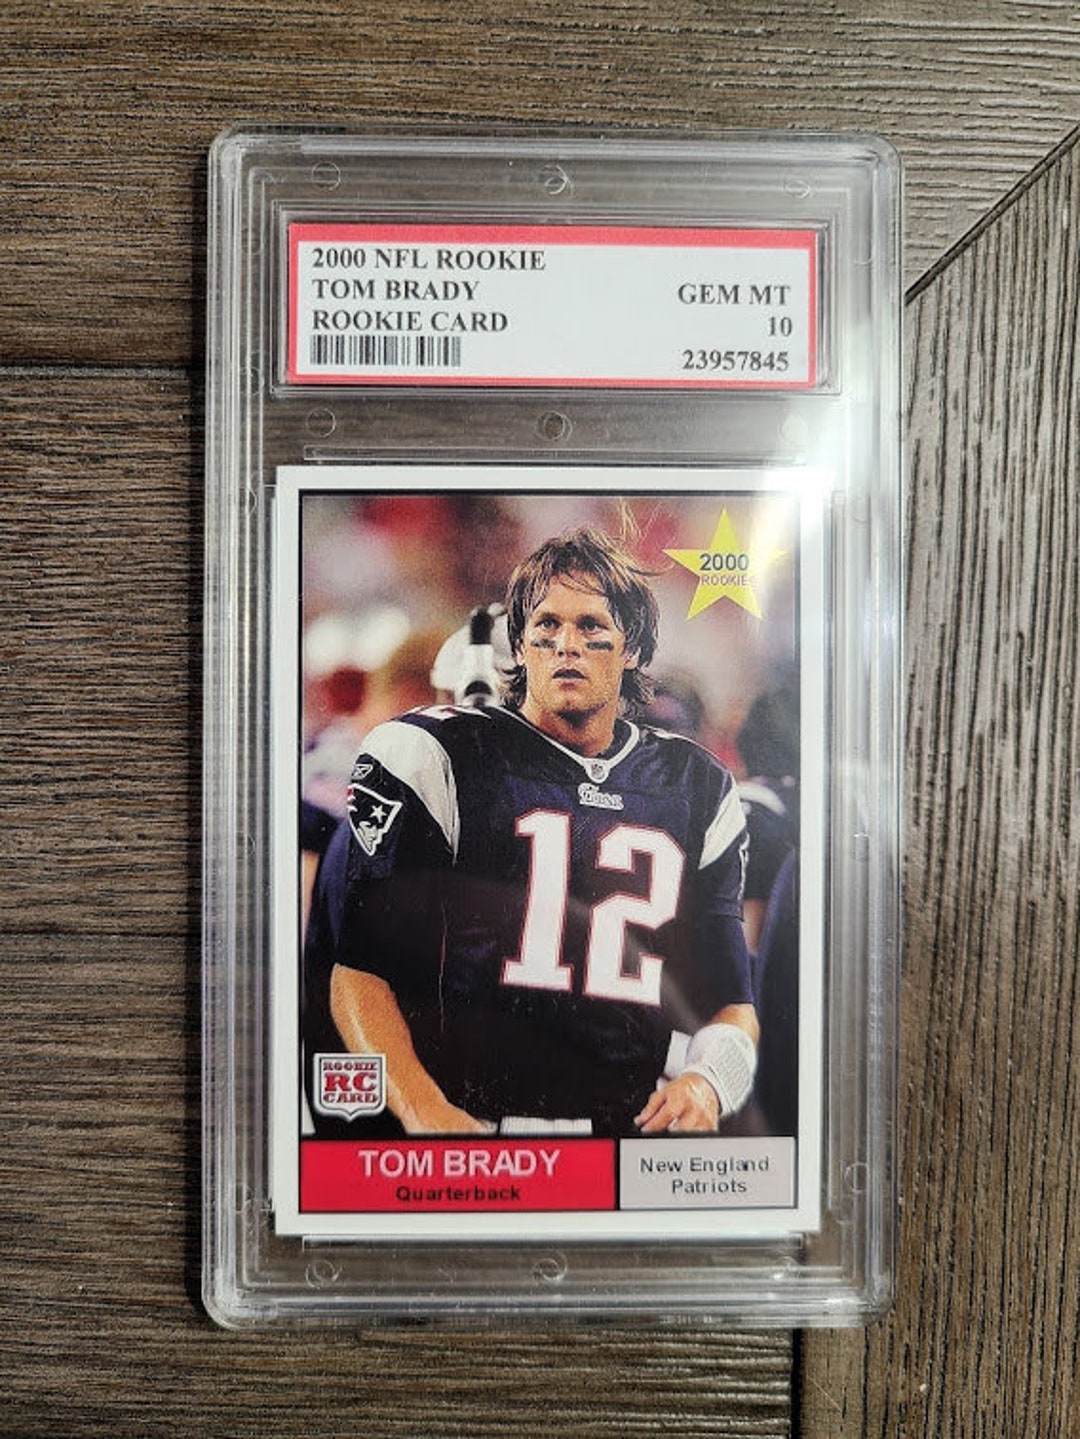 2x Graded Tom Brady 2000 Custom Football Card 